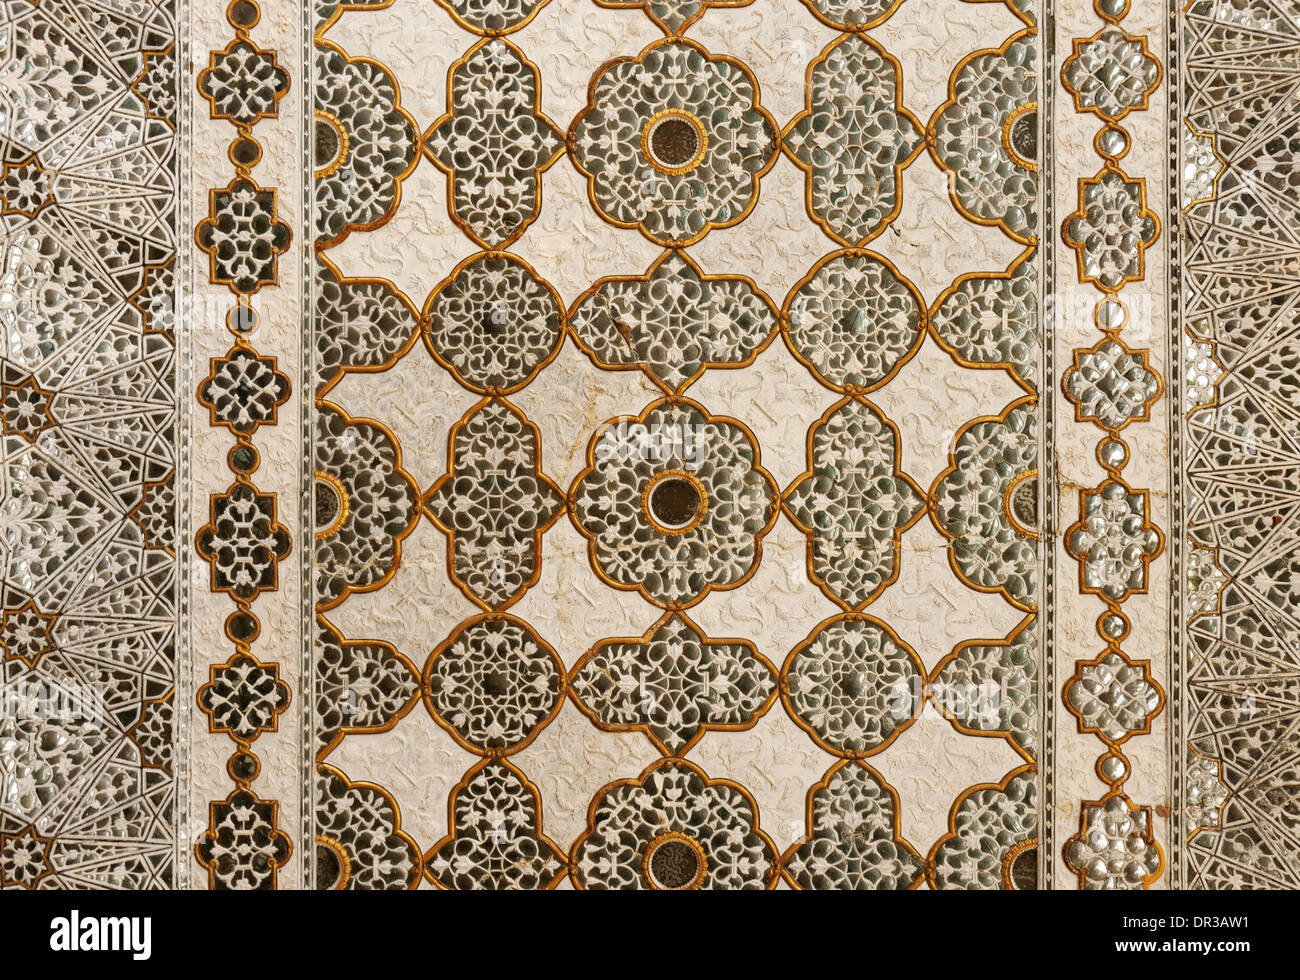 Dettagli dal Sheesh Mahal, il Palazzo degli specchi dell'Amber Fort Jaipur, Rajasthan, India Foto Stock